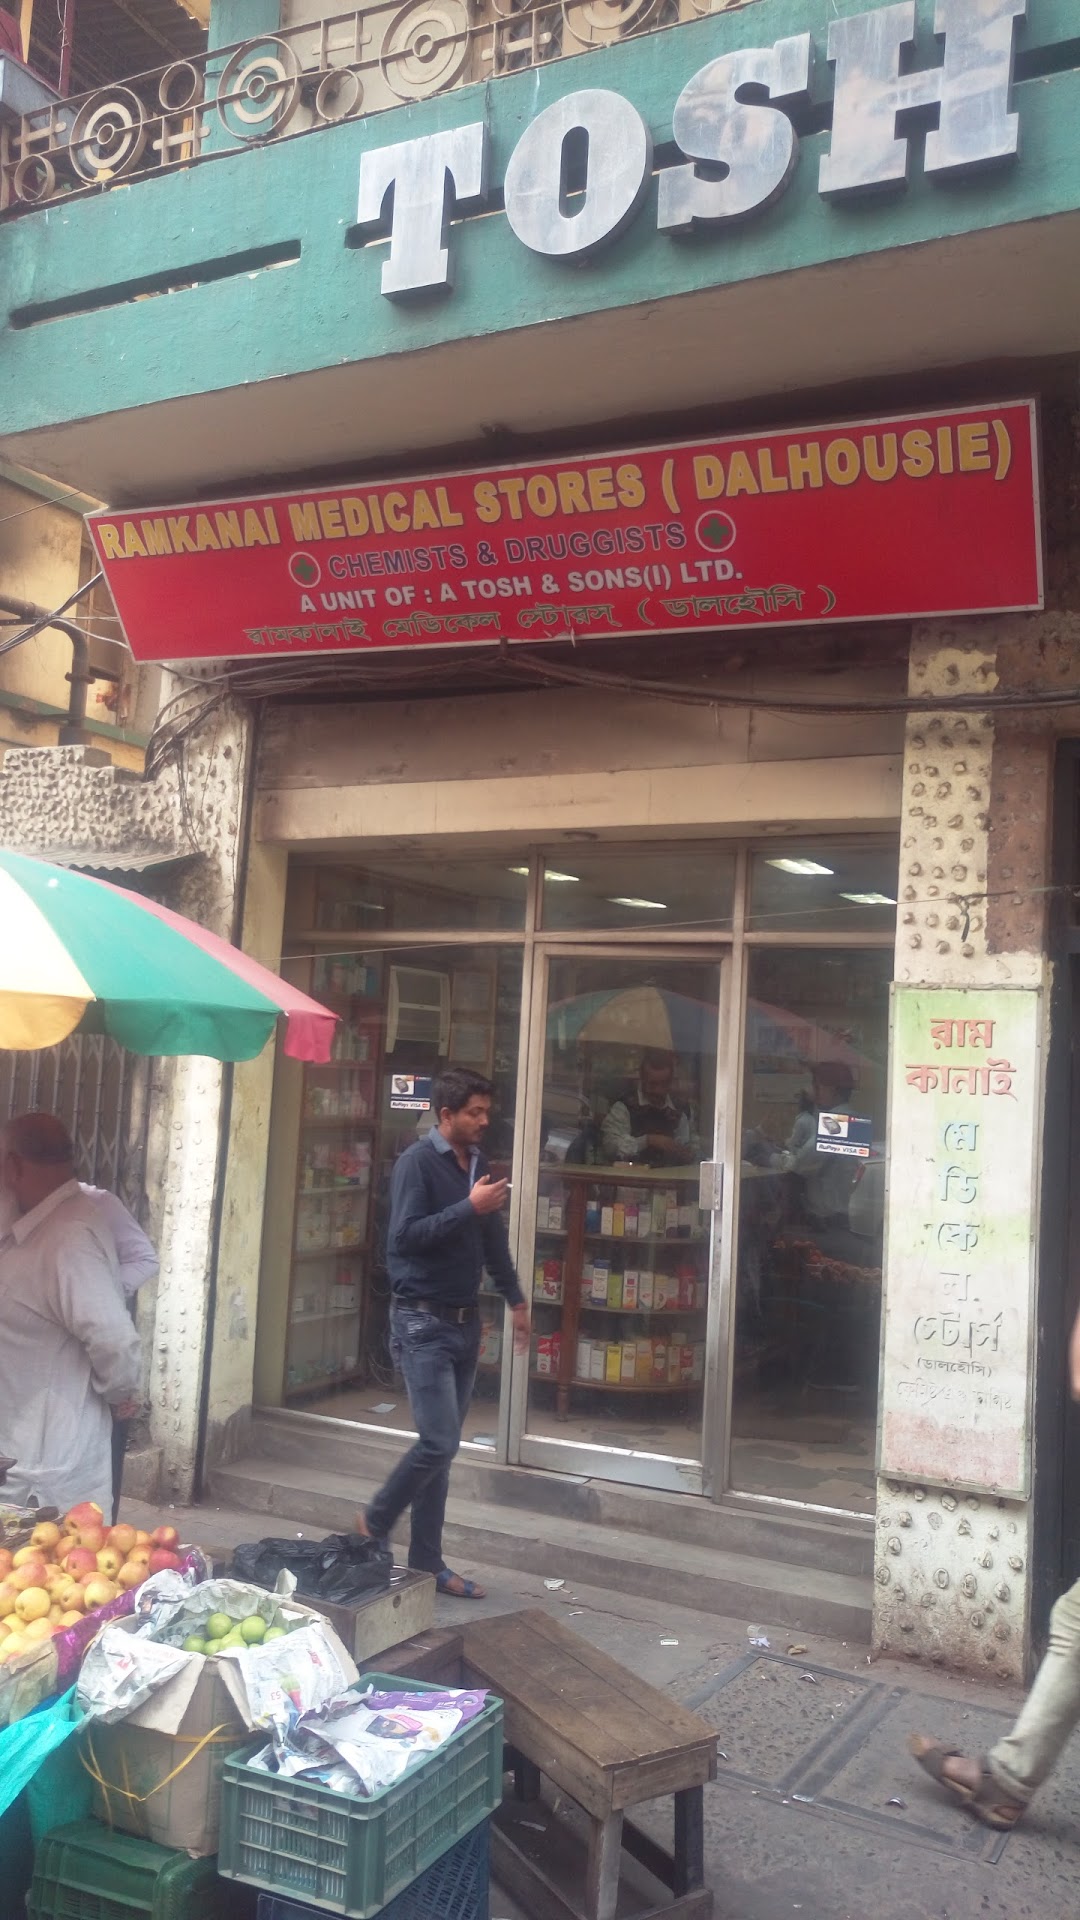 Ramkanai Medical Stores